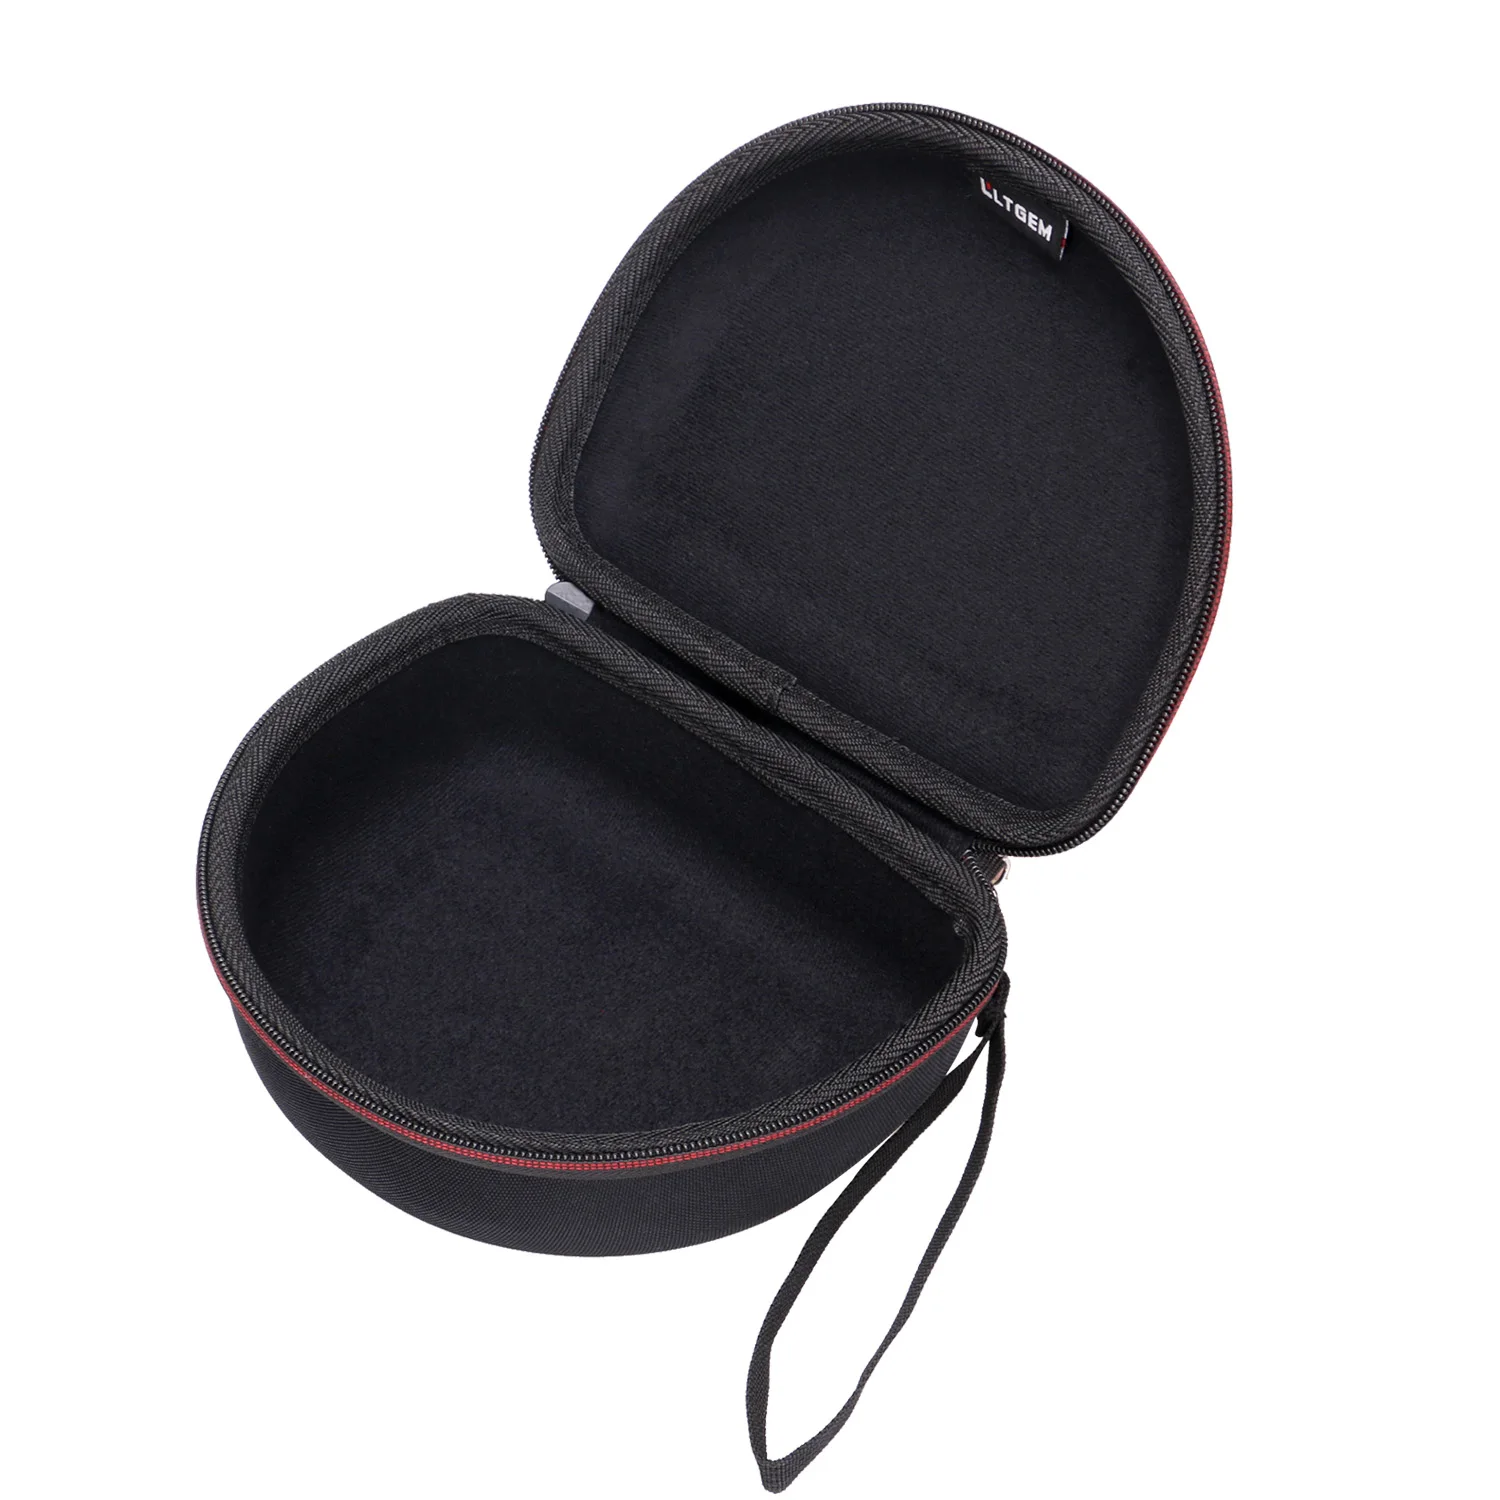 LTGEM Hard Headphones Case for Sony MDR7506 Professional Large Diaphragm Headphone - Travel Carrying Storage Bag